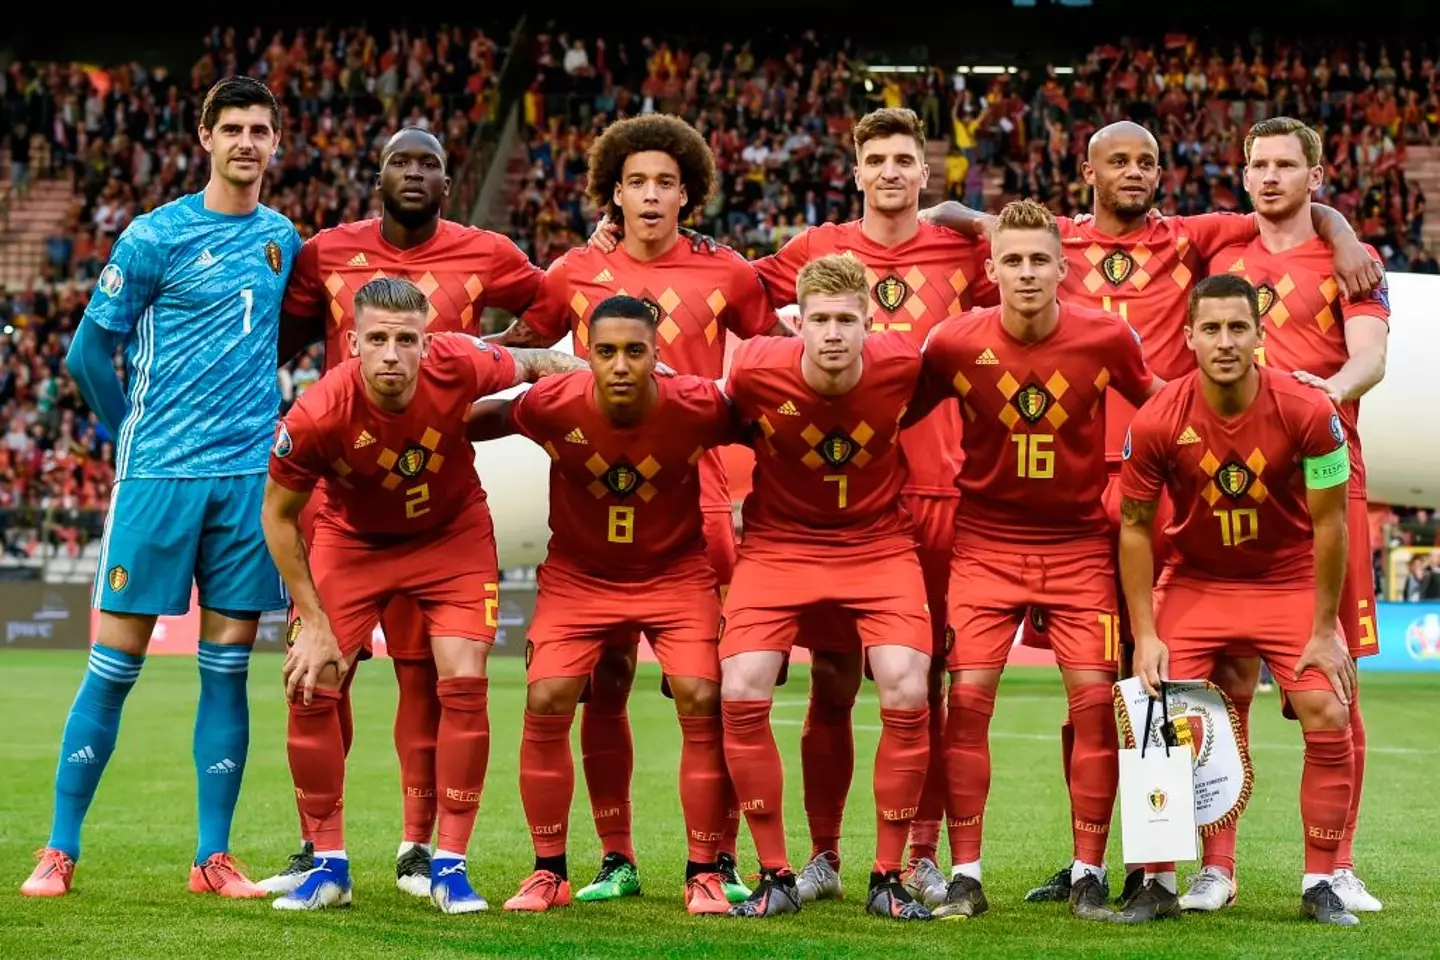 Belgium's 'golden generation' includes players such as Eden Hazard, Kevin de Bruyne, Romelu Lukaku and Thibaut Courtois. (Image: Getty)